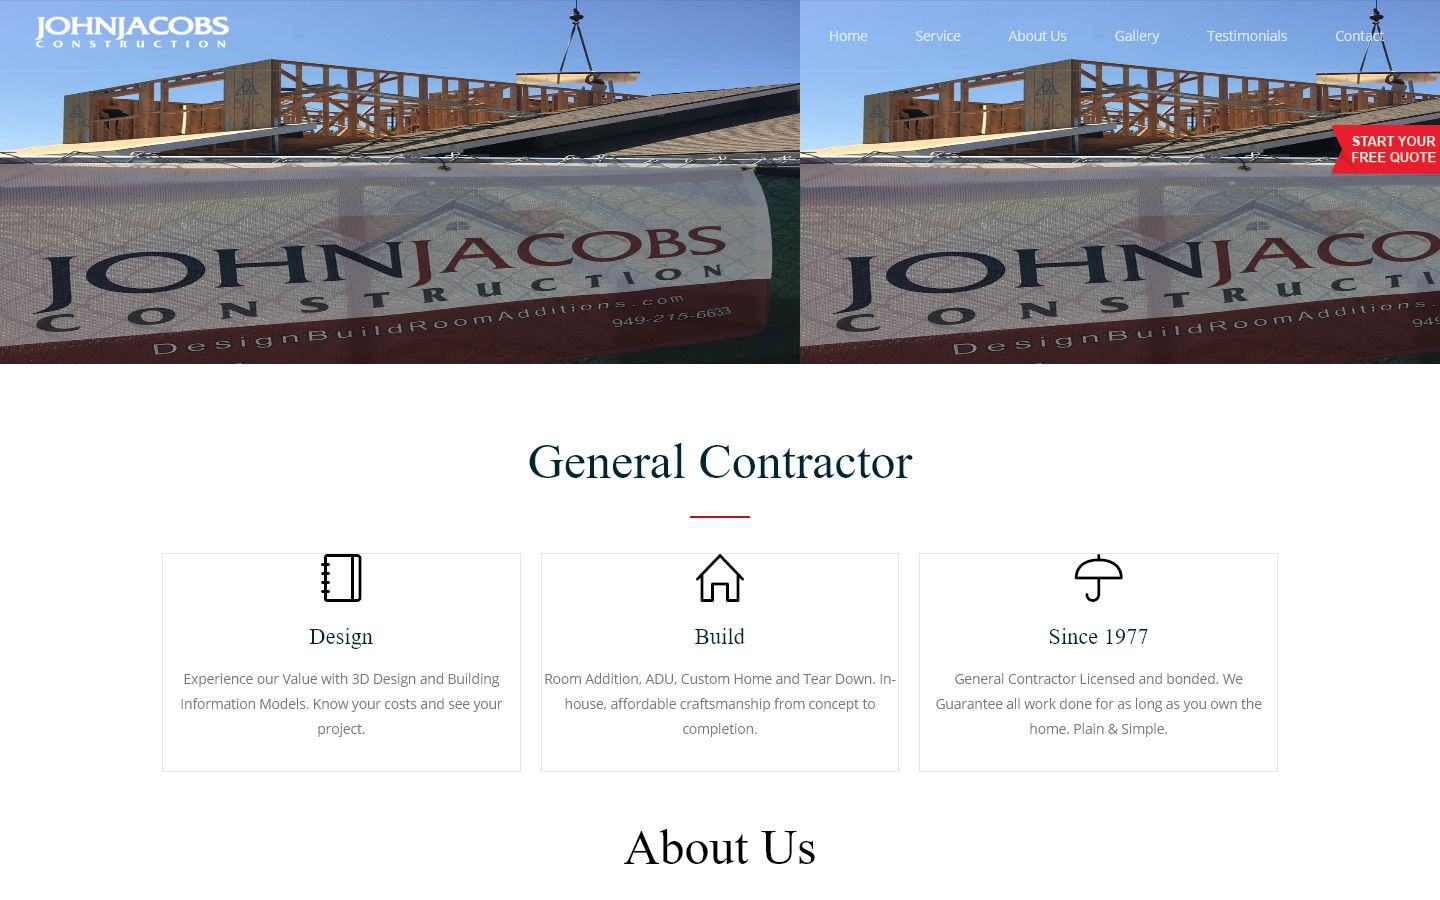 John Jacobs Construction